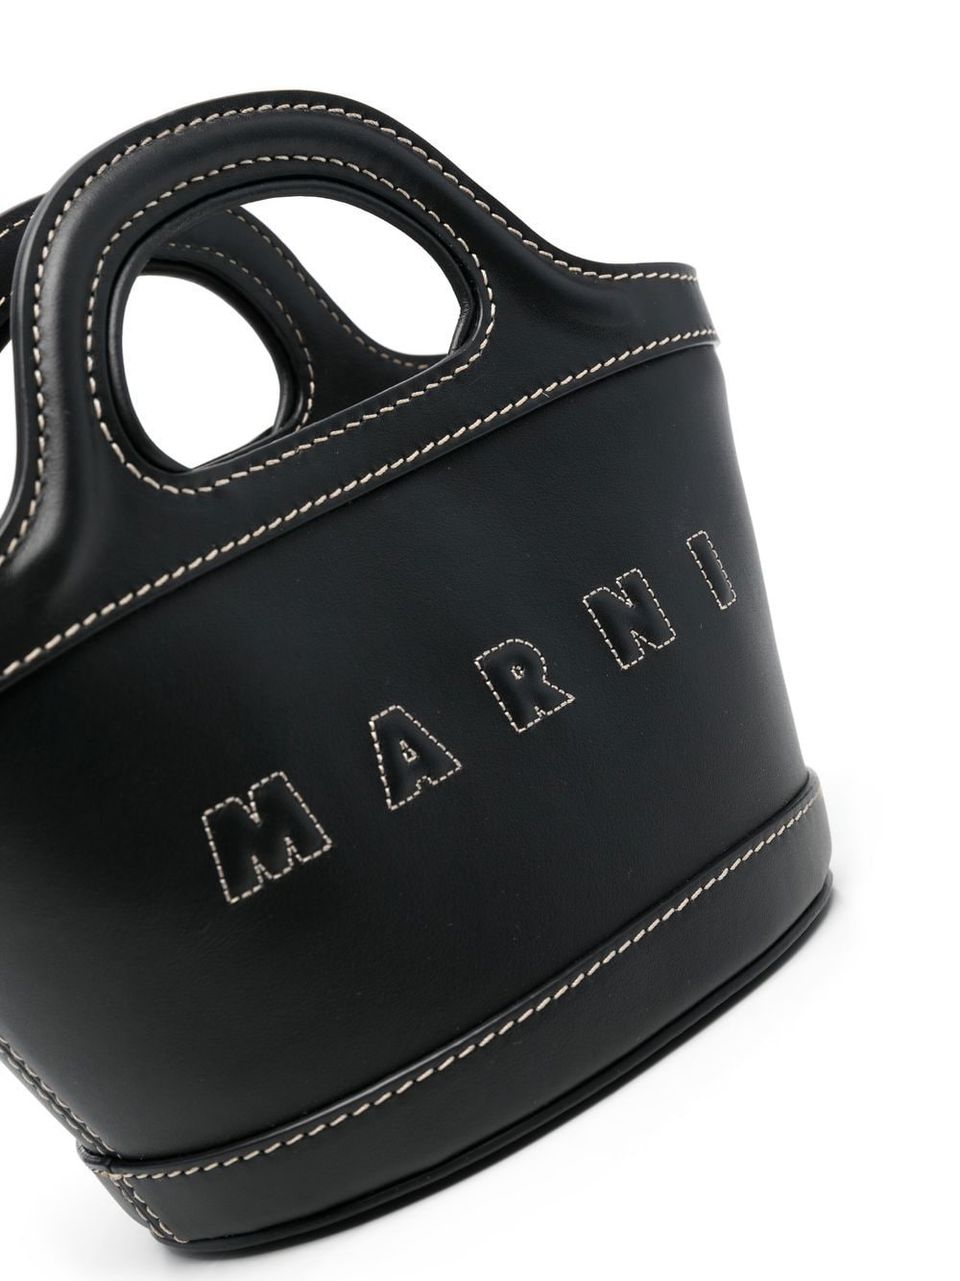 Marni Tropicalia - Tote bag for Woman - Pink - BMMP0096U0LV589-00C61